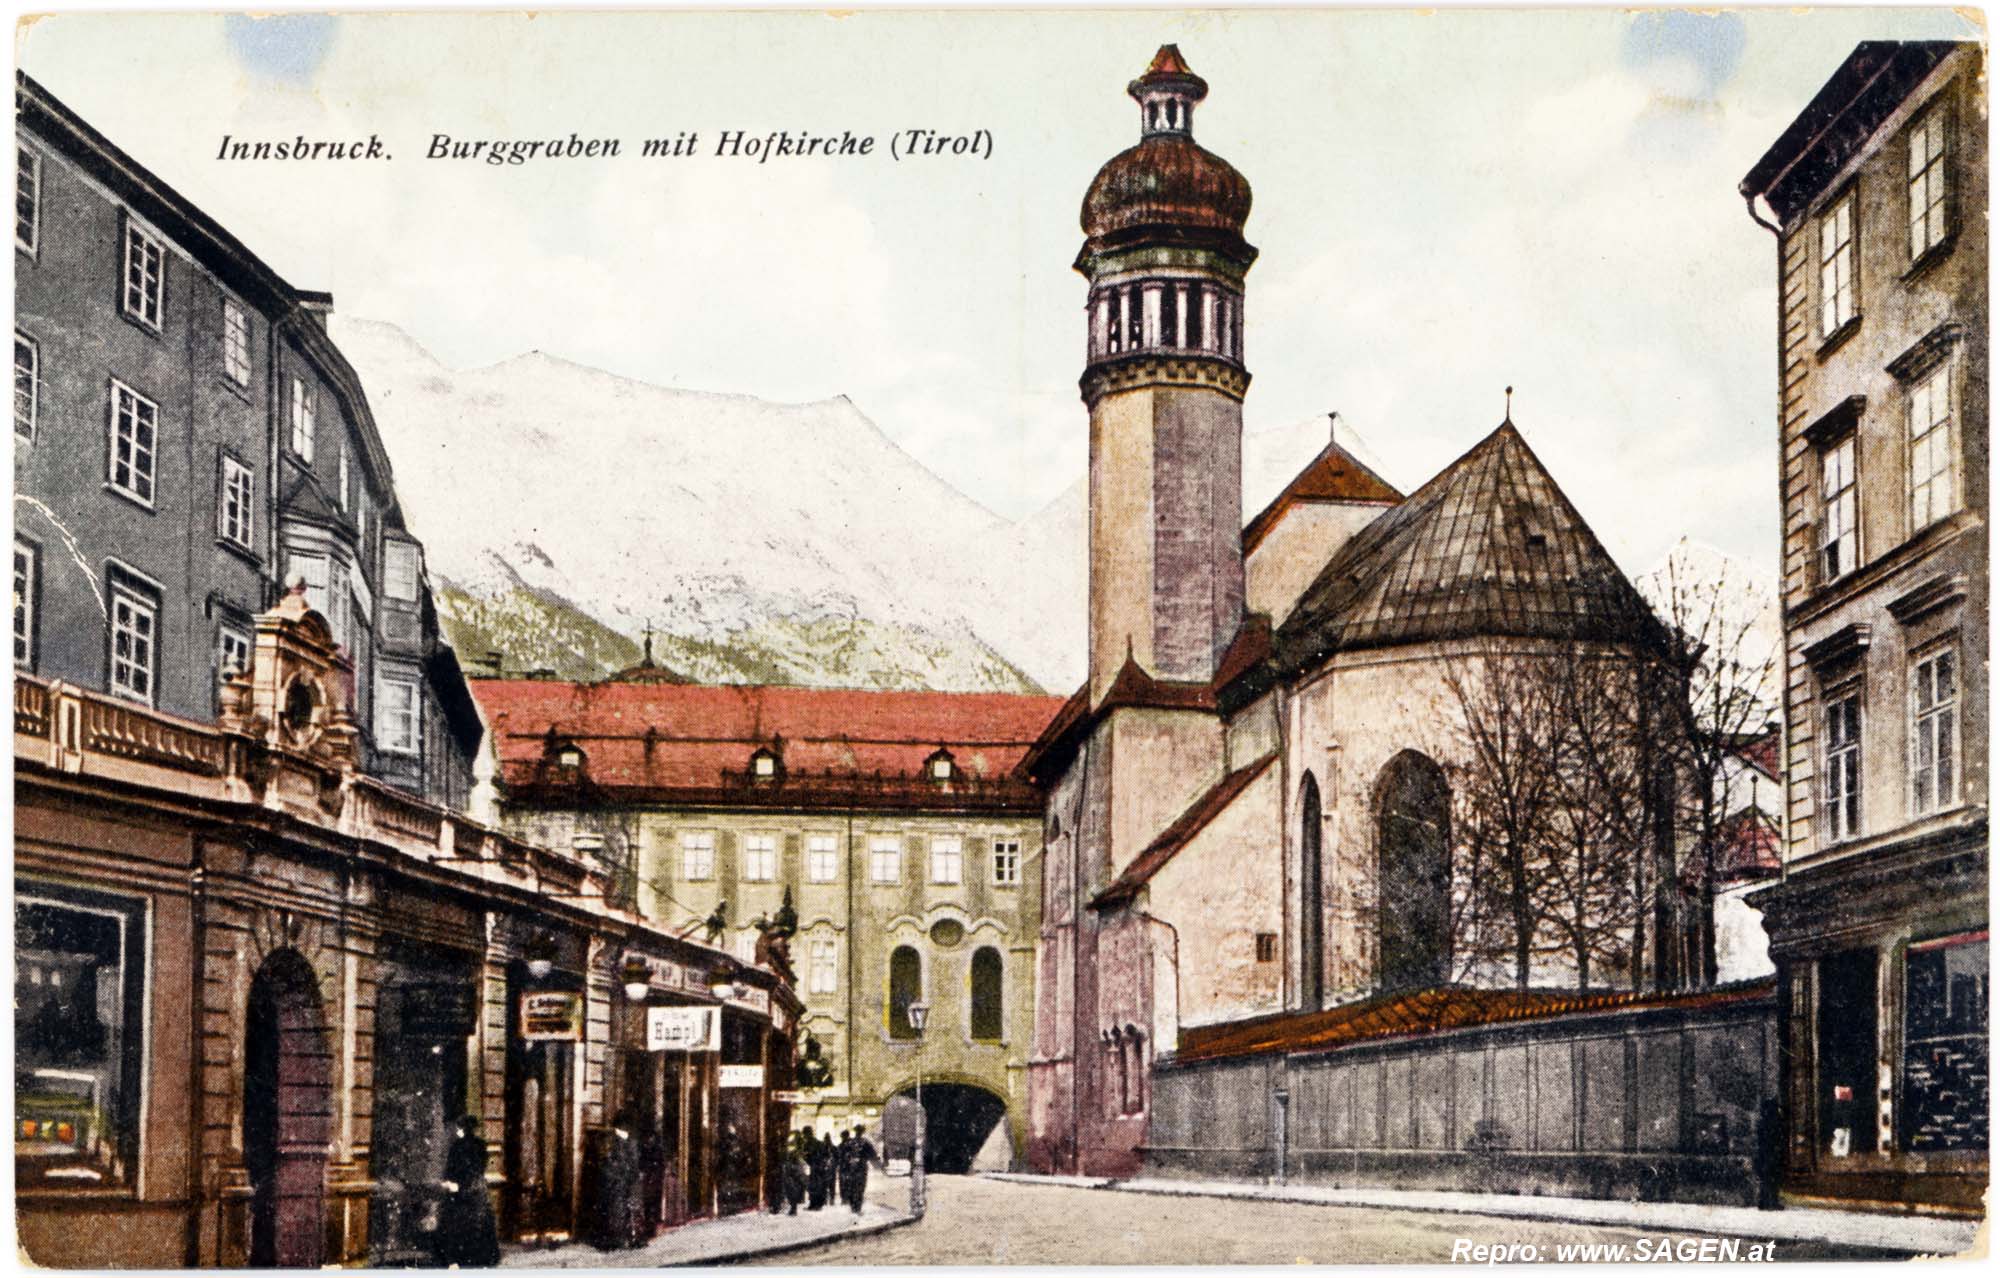 Innsbruck. Burggraben mit Hofkirche (Tirol)